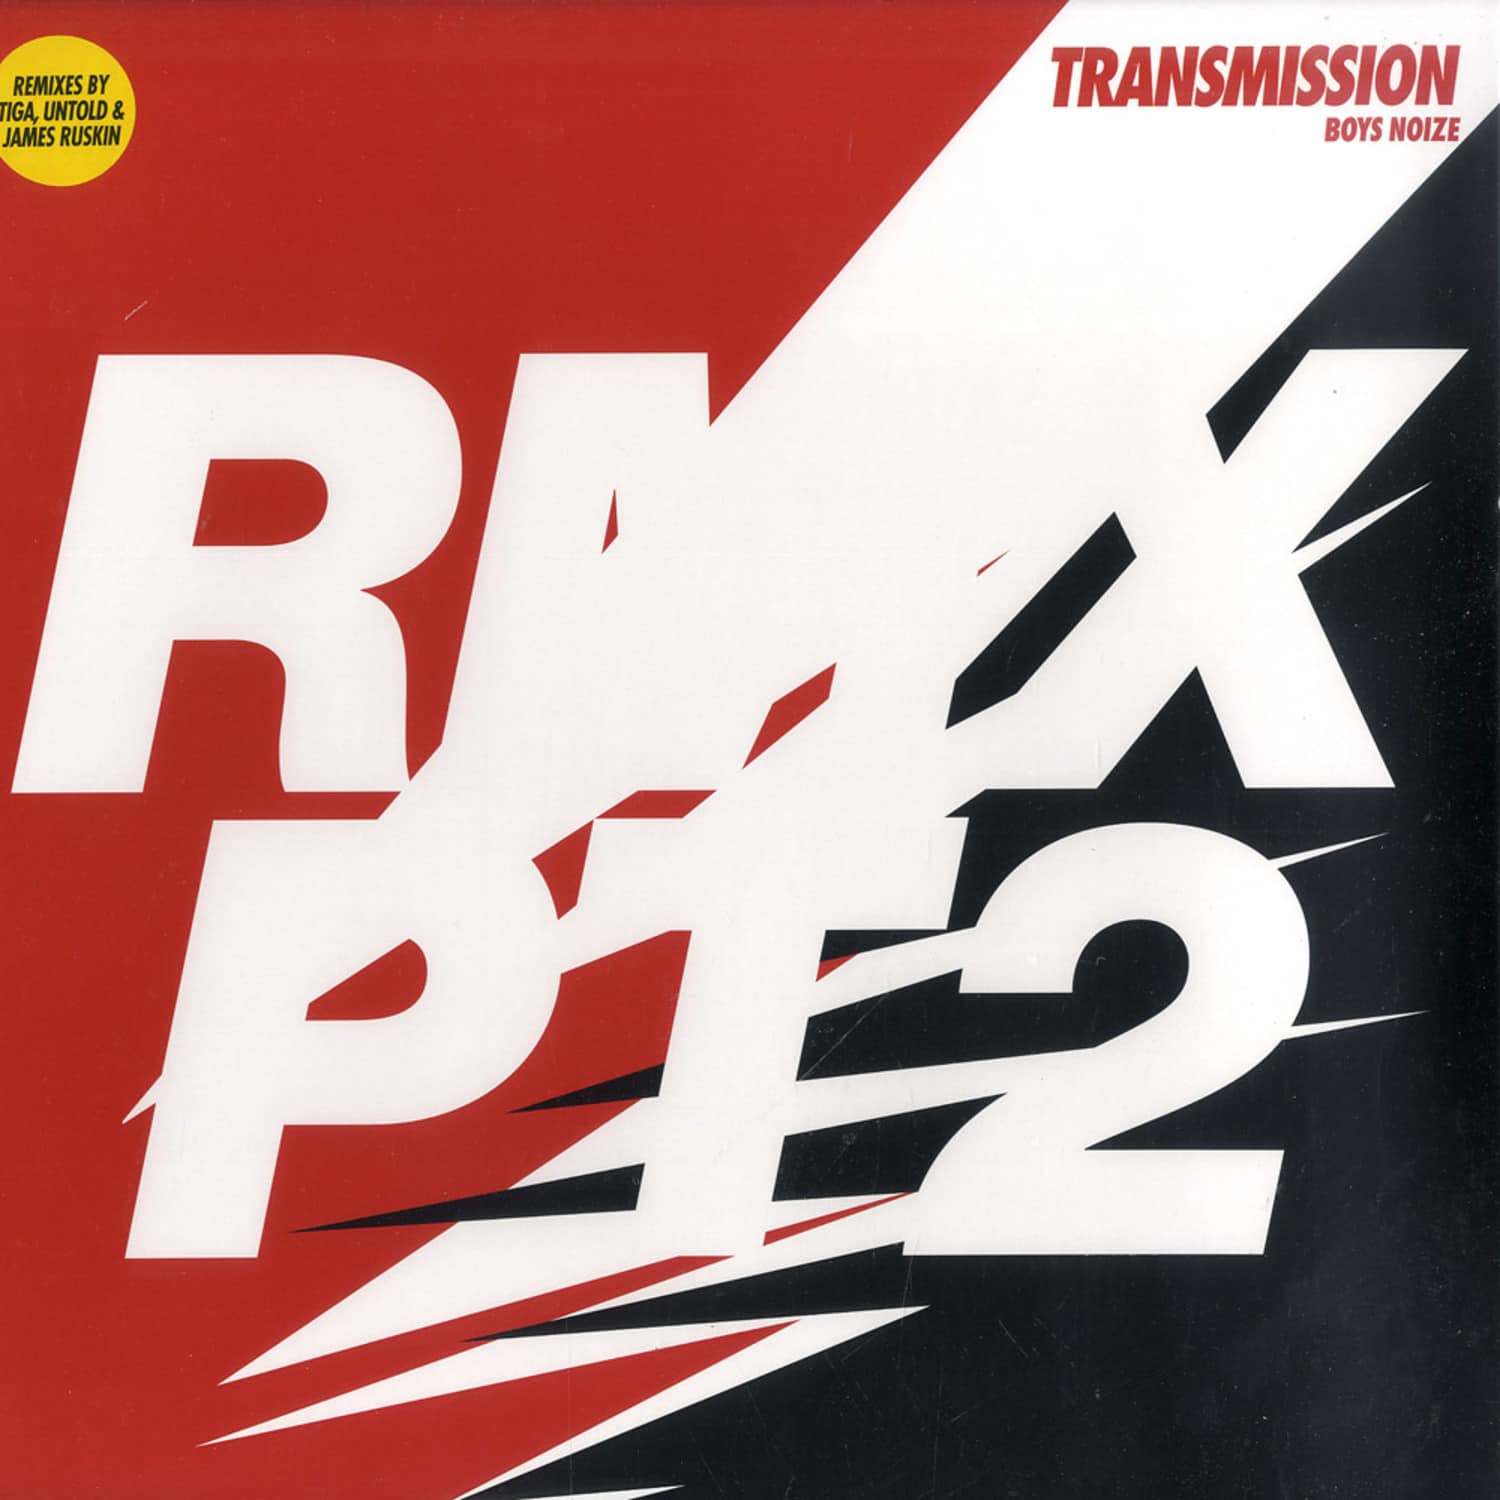 Boys Noize - TRANSMISSION REMIXES PT.2 TIGA / JAMES RUSKIN REMIX